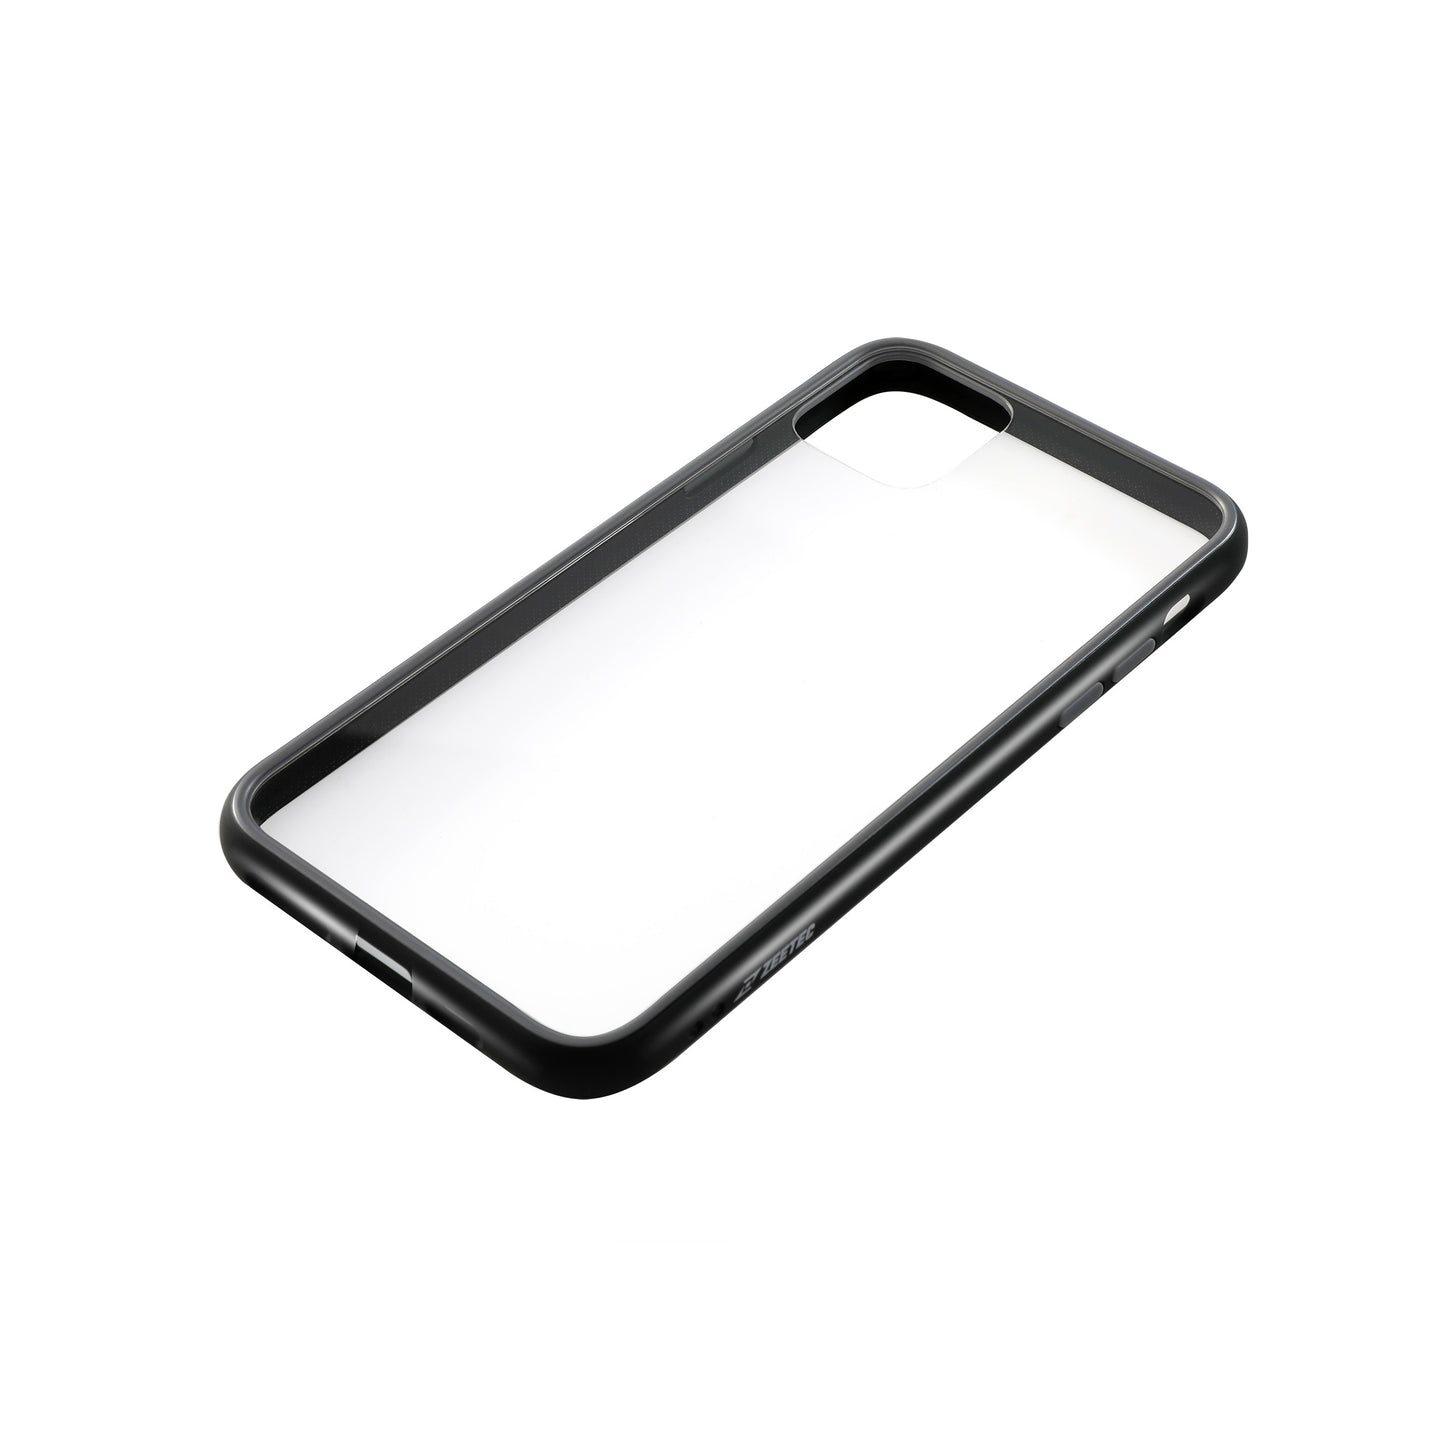 iPhone 11 Pro Max Case ZEETEC PureGuard Slim Protection